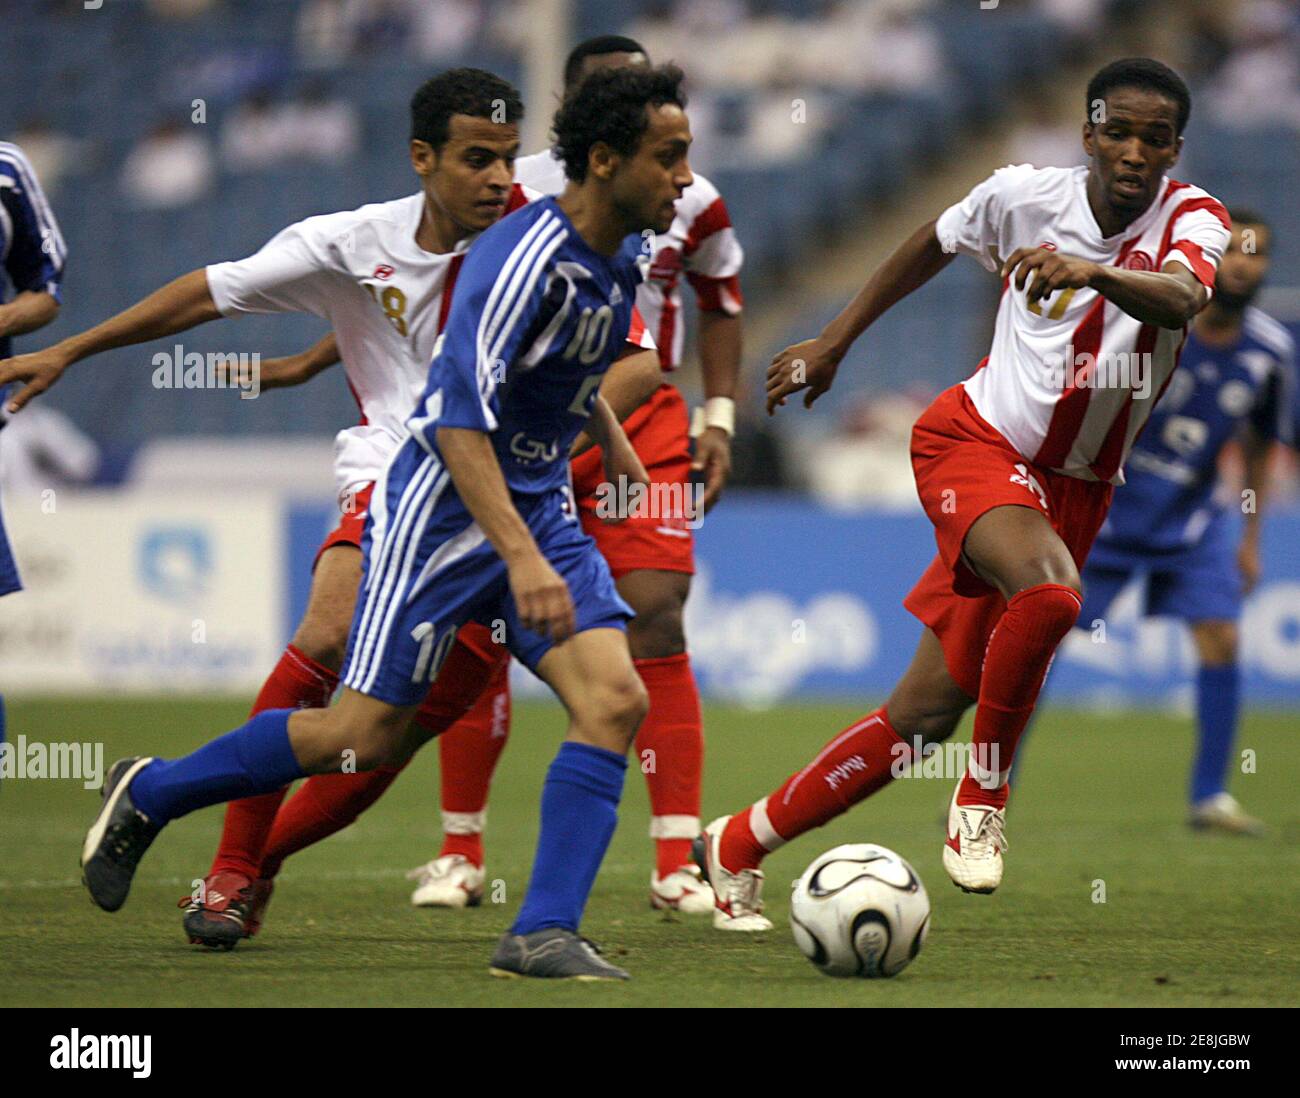 Al Hilals Muhammad al-Shlhoob (C) kämpft mit Al Wehdas Sulieman Amido (R) und Sultan al-Lehiani während ihres saudischen König-Abdullah-Cup-Qualifikationsspiels in Riad am 19. April 2008 um den Ball. REUTERS/Fahad Shadeed (SAUDI-ARABIEN) Stockfoto